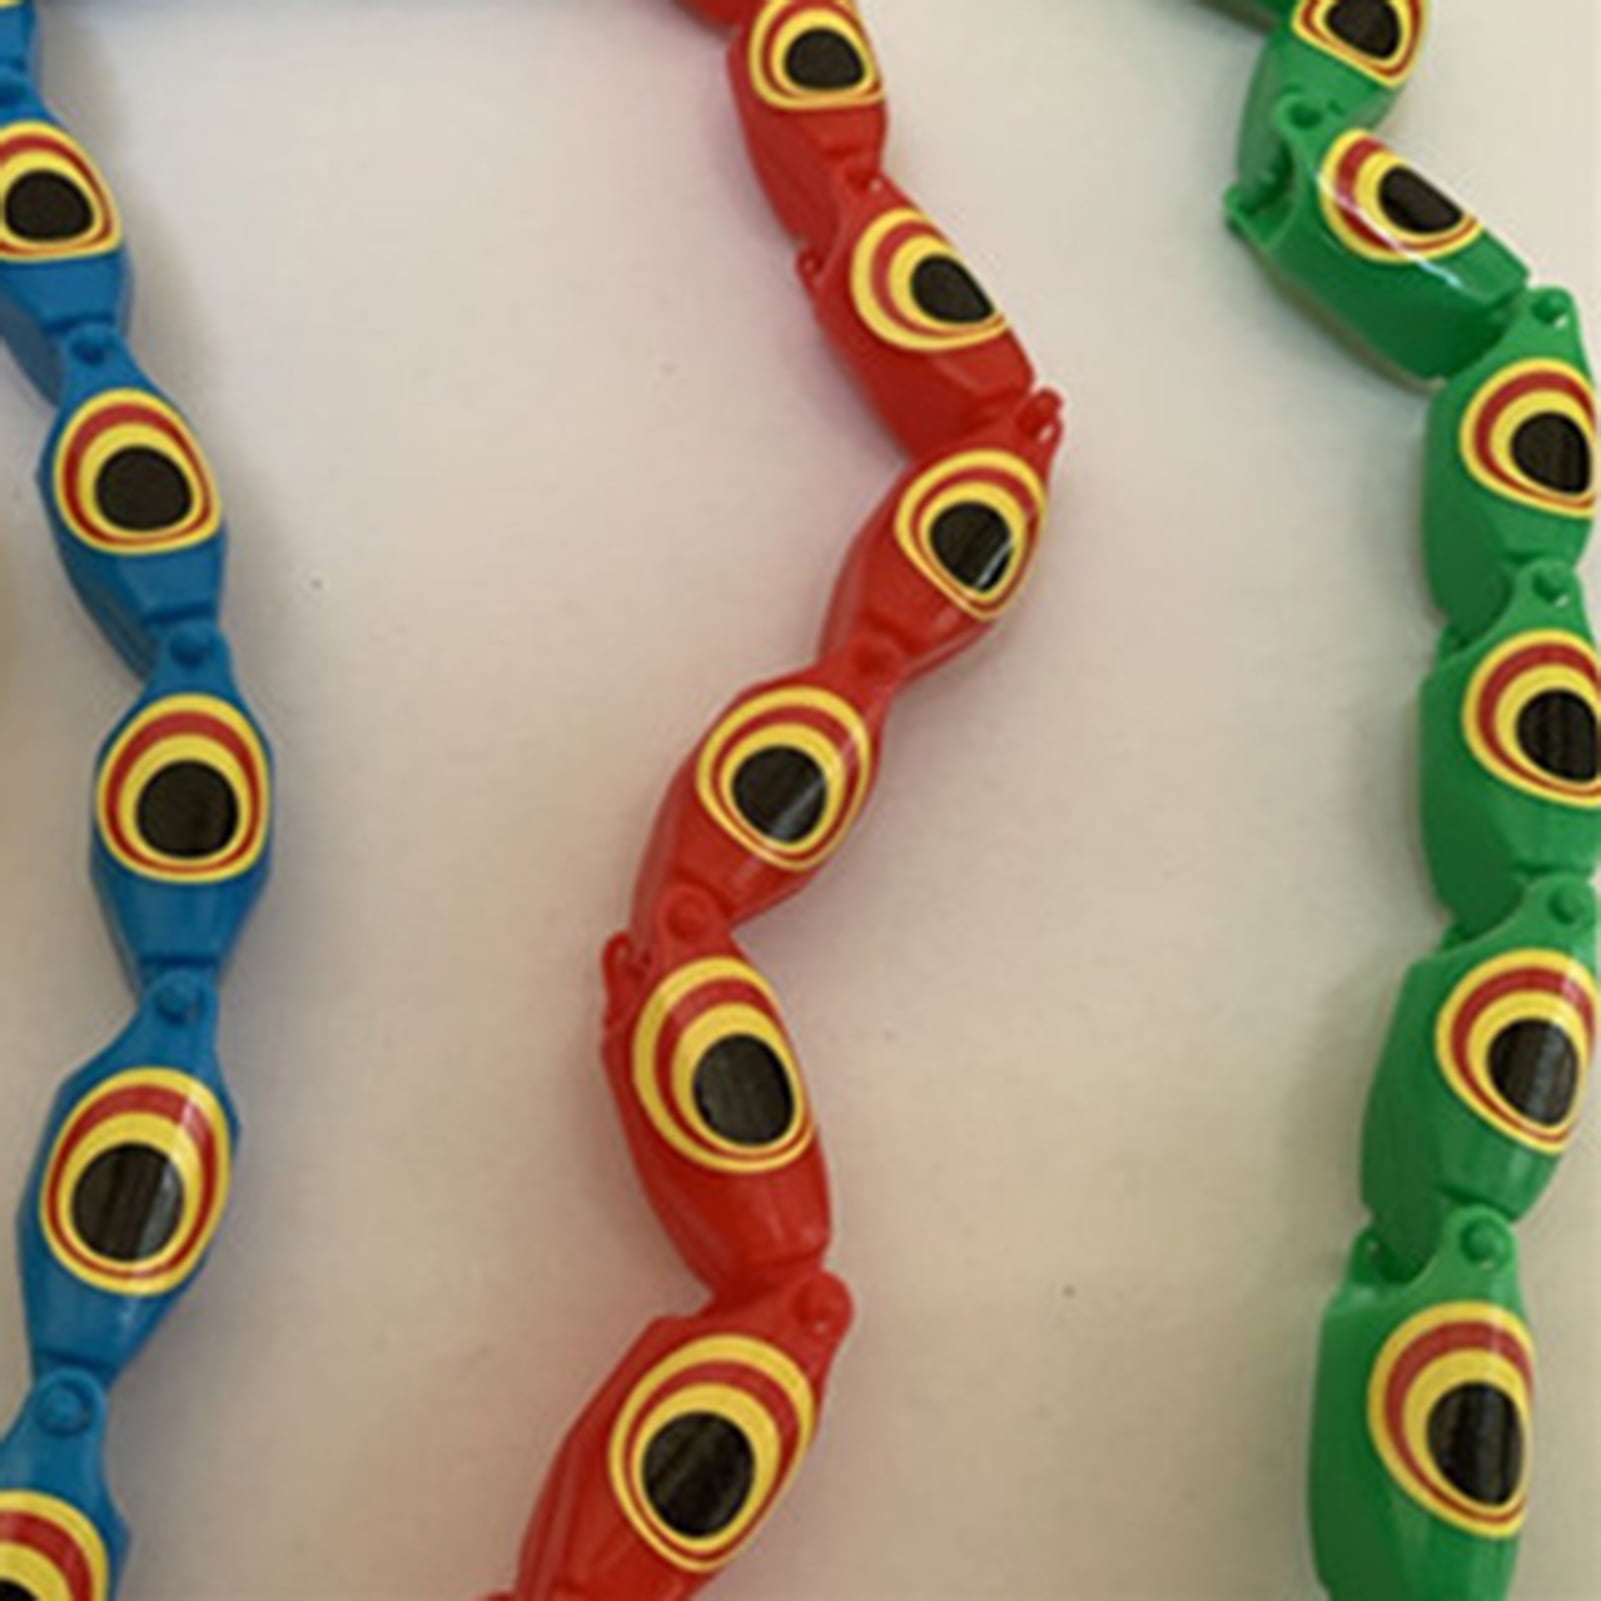 Joint Snake Toy Objet Insolite Cosas Raras Prank Toys For Kids